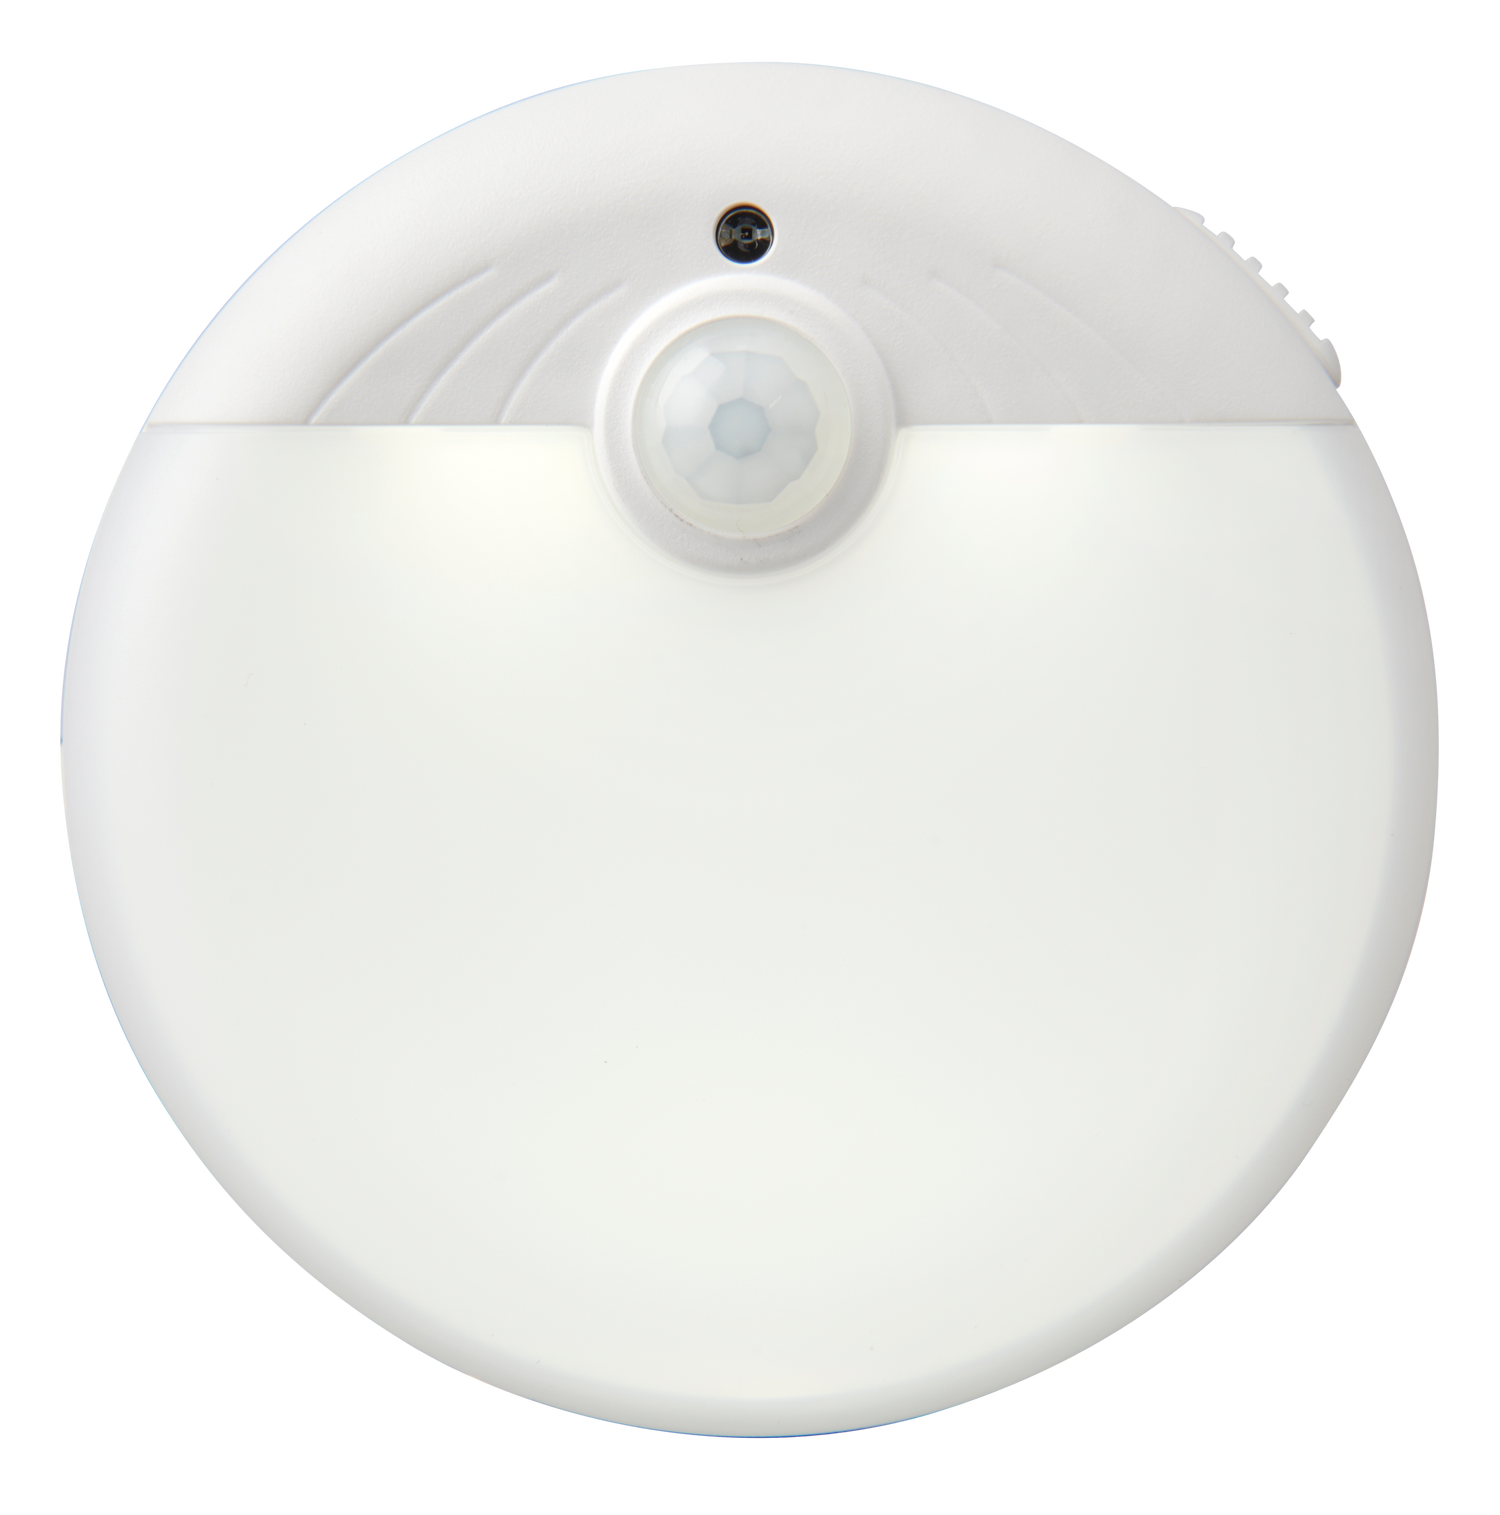 SecuCare LED night light with sensor